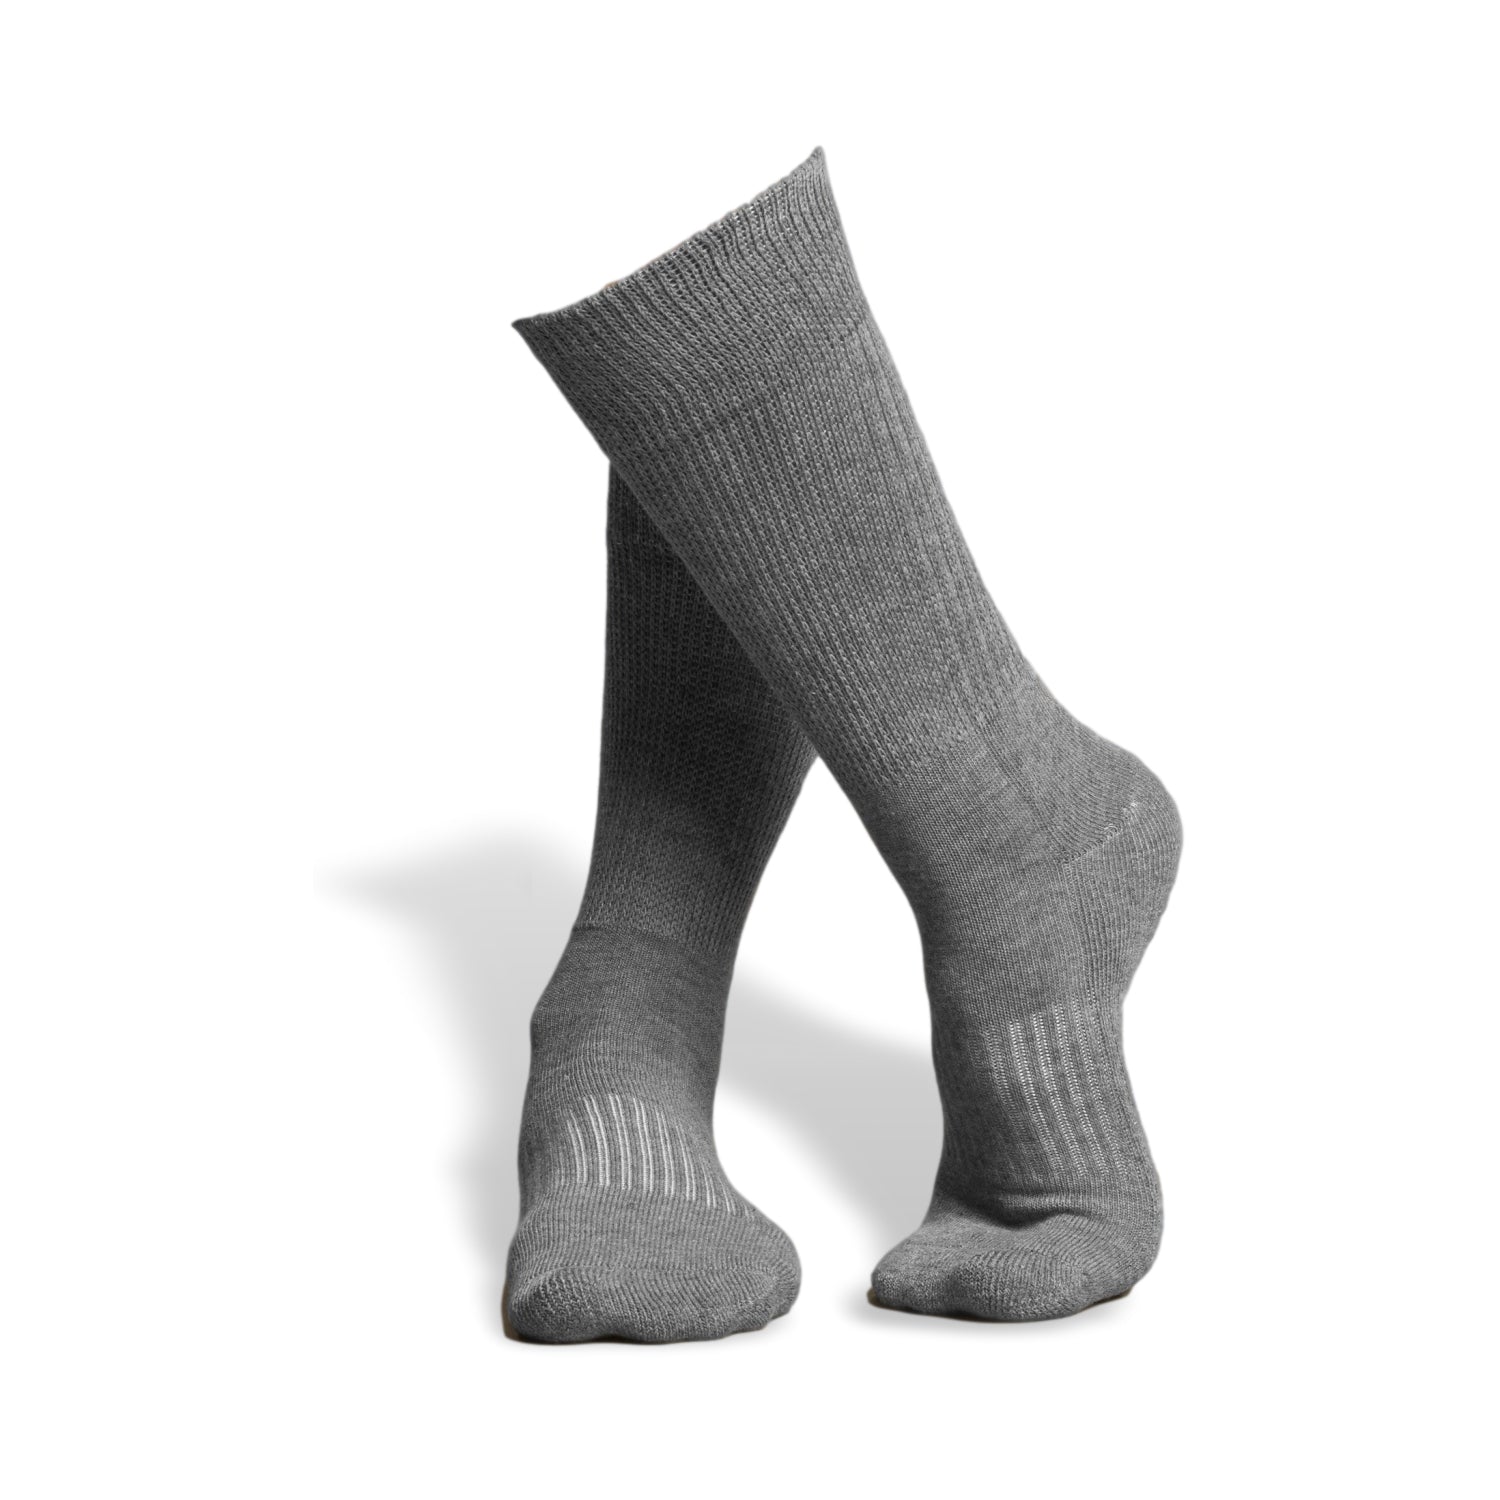 Gripjoy Fuzzy Grip Socks - Winter Slipper Socks with Grippers for